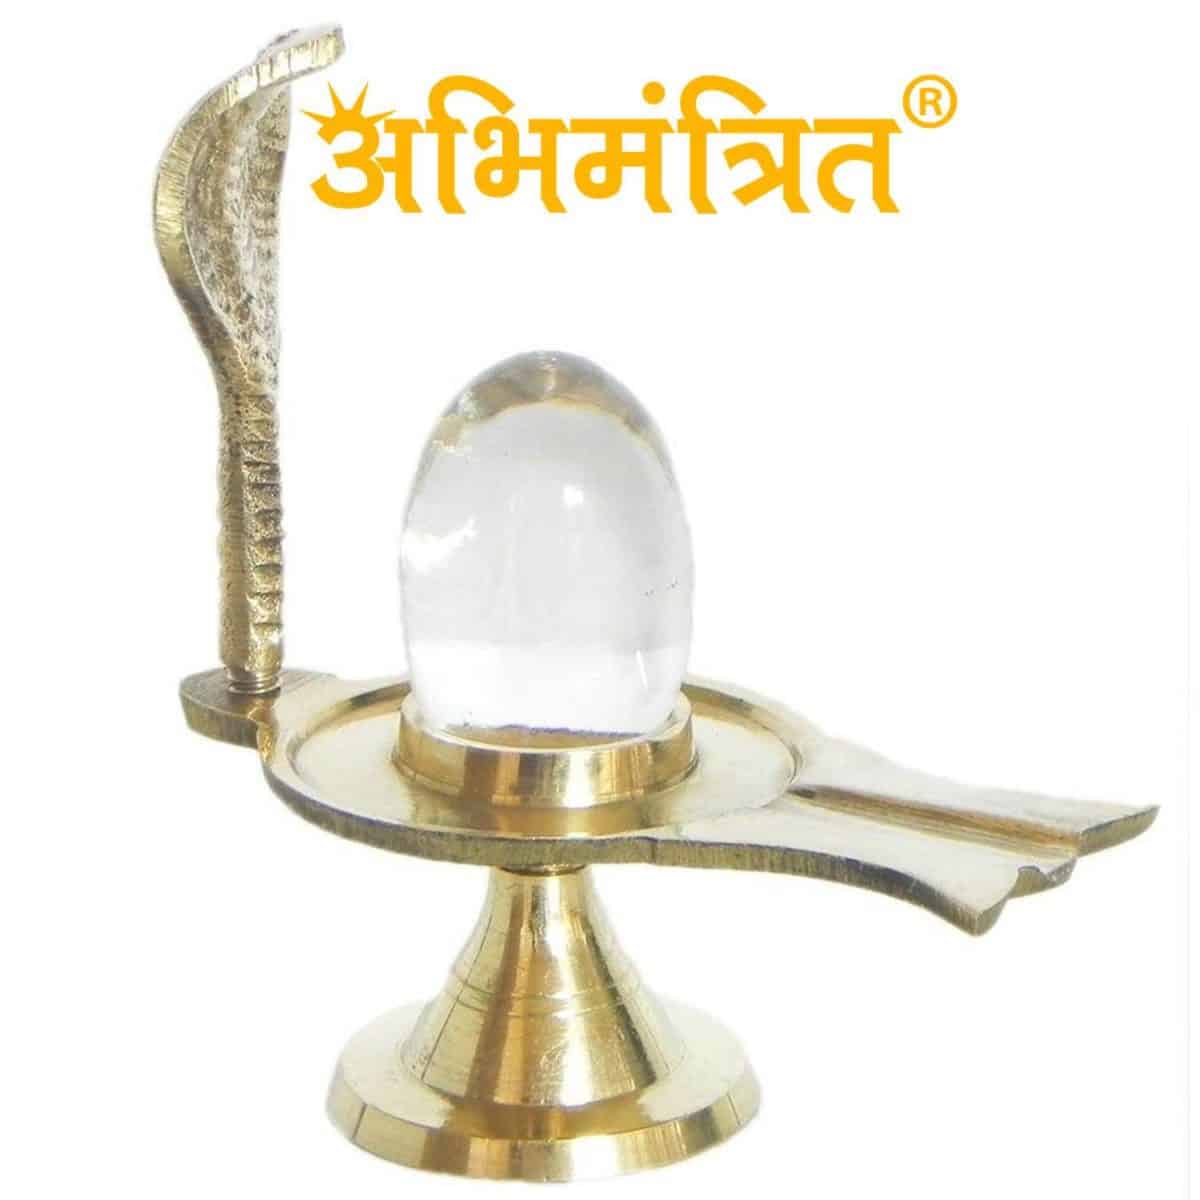 Buy Original Sphatik Shivling at Best Price Abhimantrit™